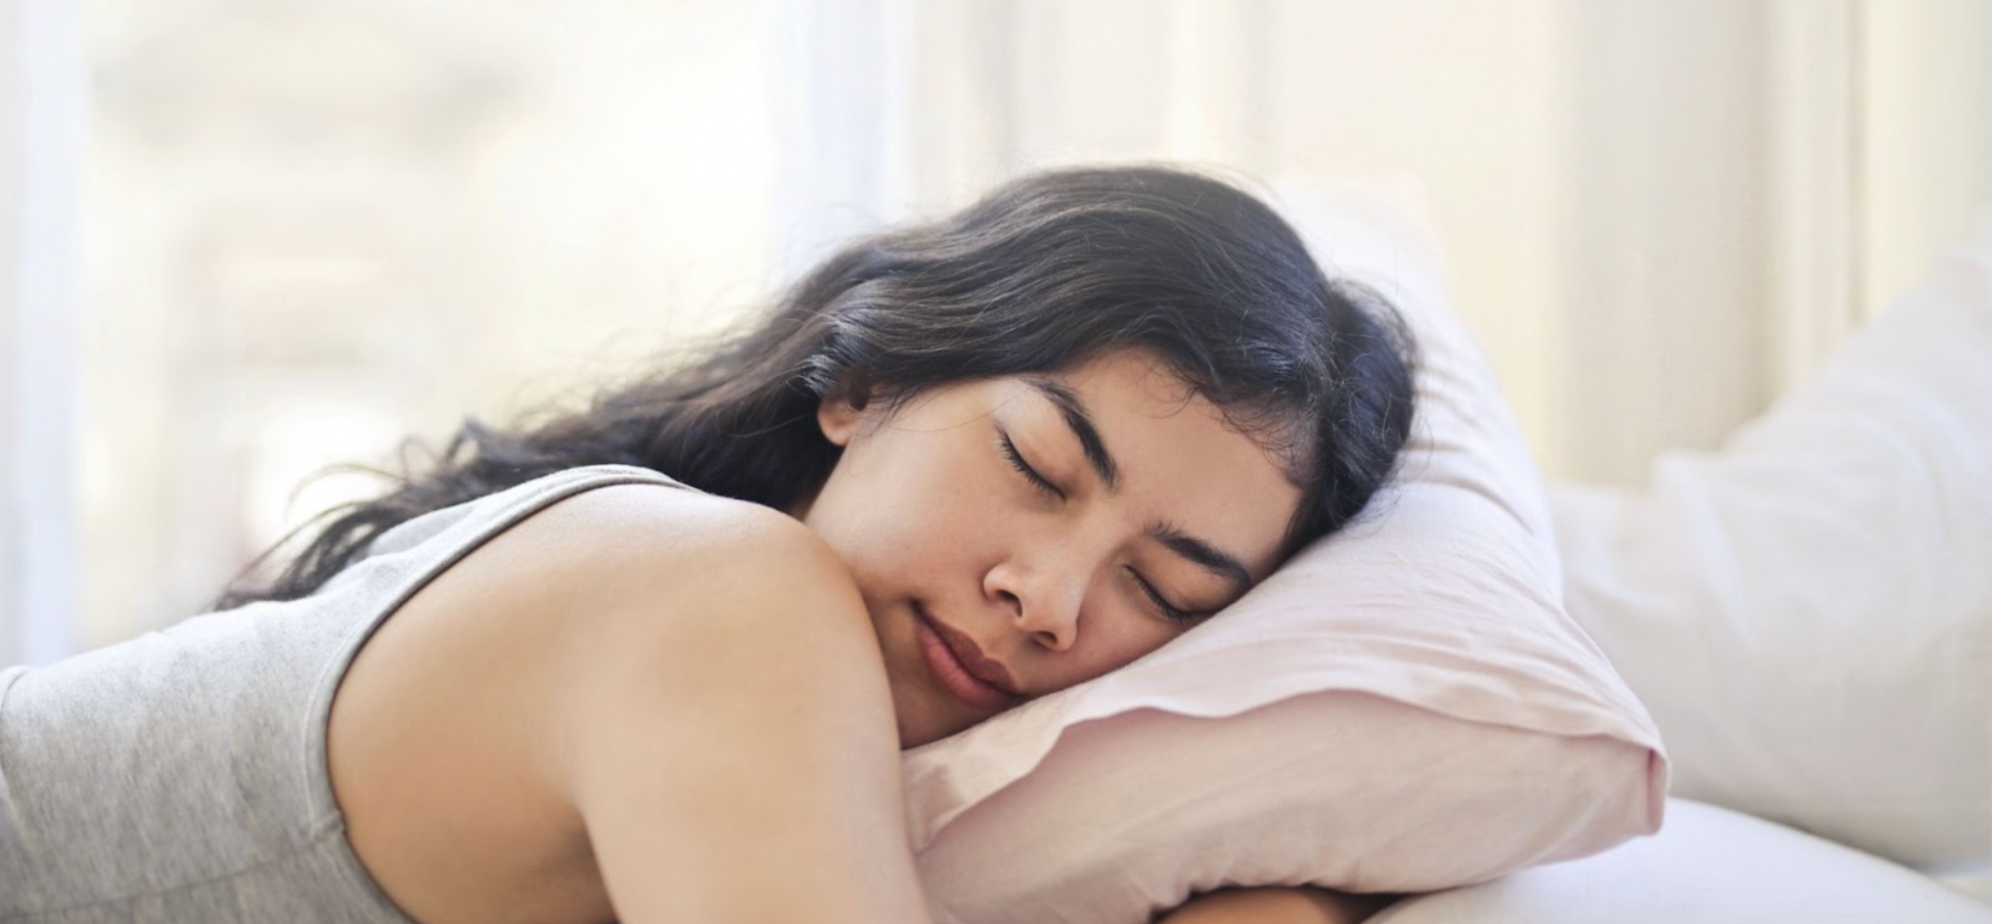 Woman with long dark hair sleeping